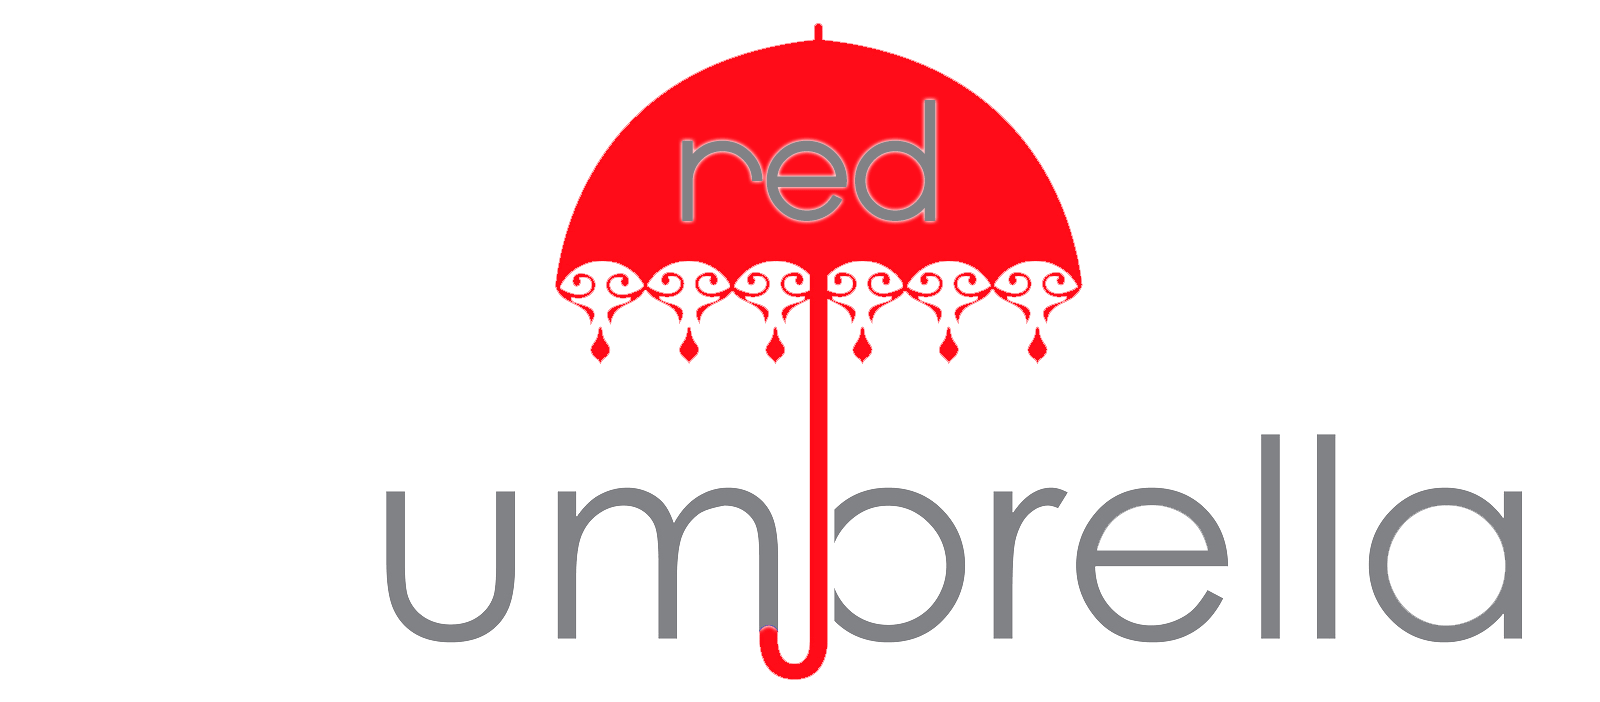 Re Umbrella Logo - Image - Red umbrella logo.PNG | RE Chronicles Wiki | FANDOM powered ...